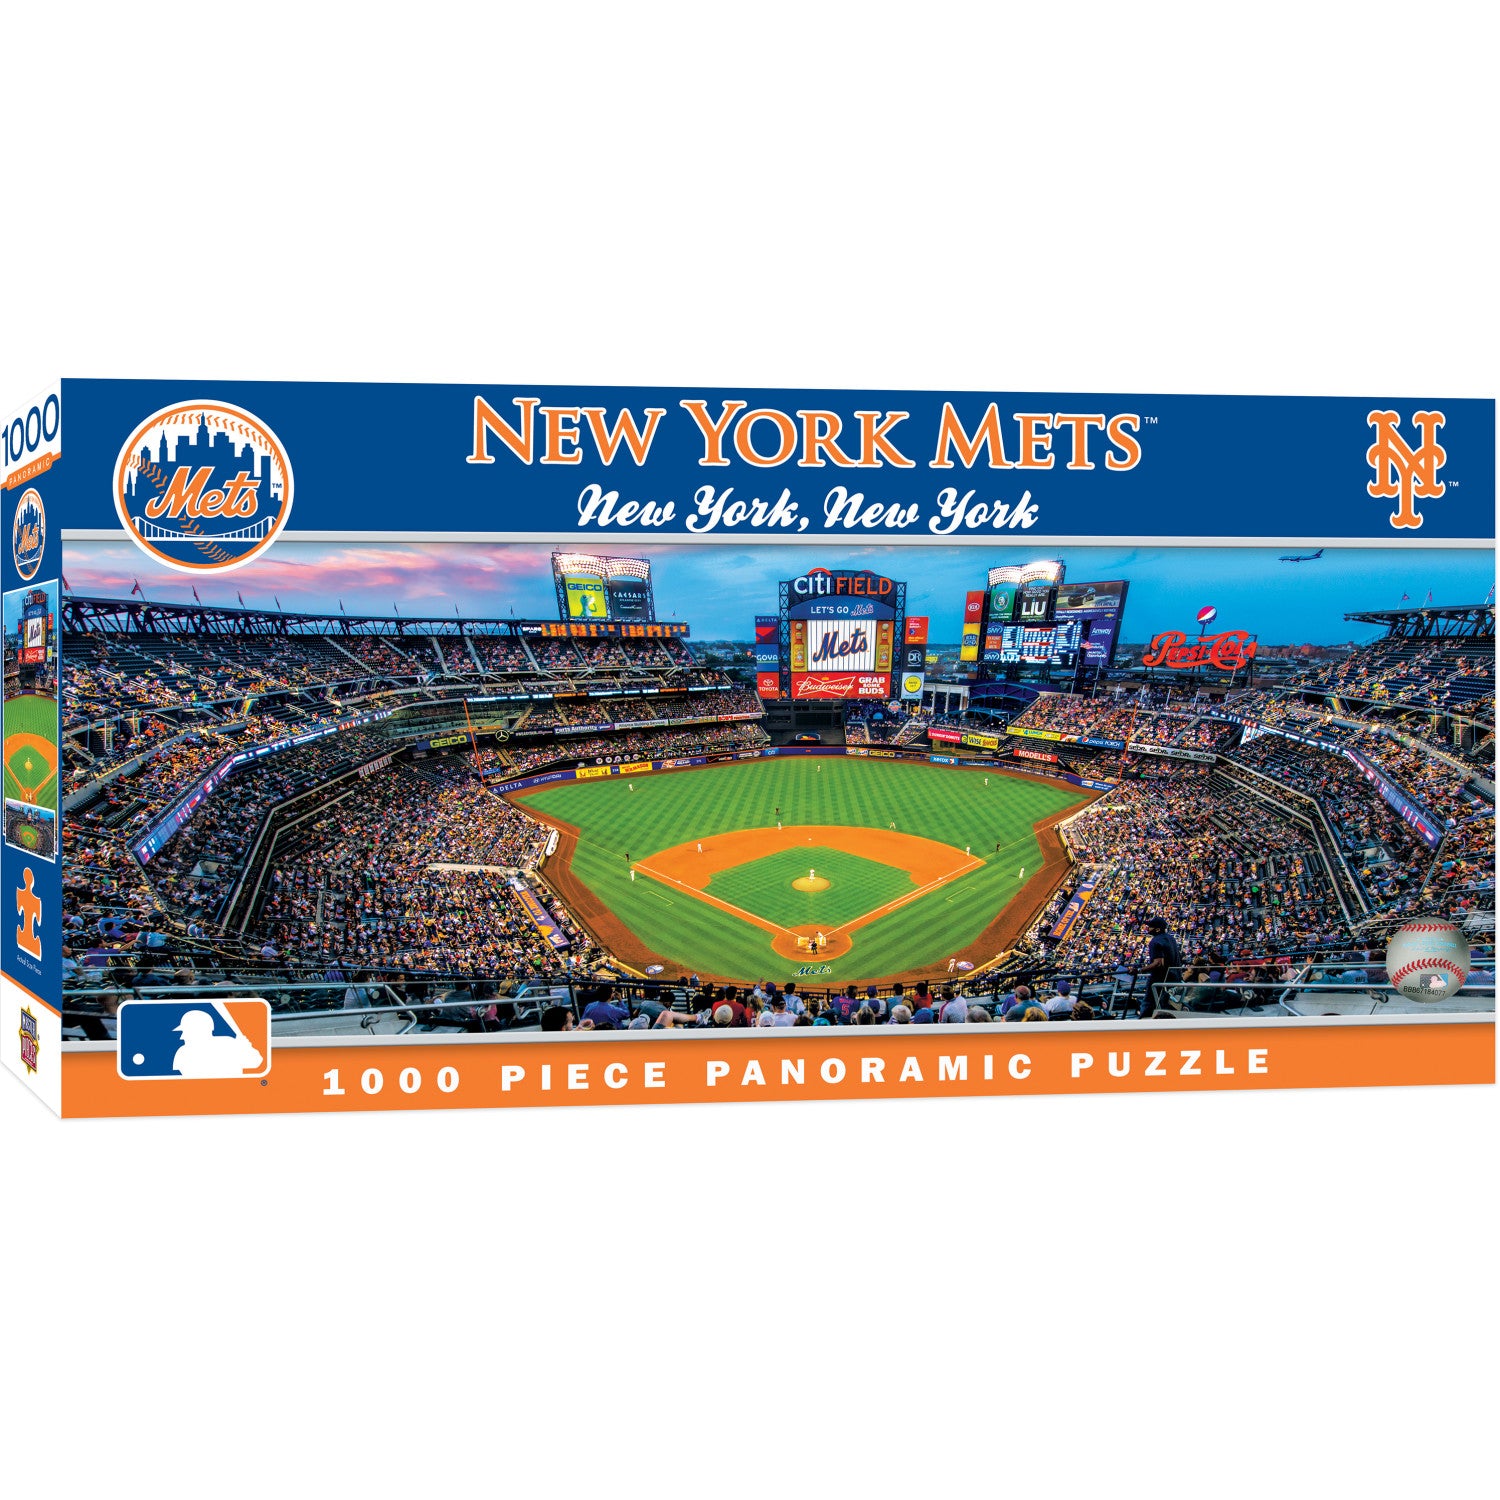 New York Mets - 1000 Piece Panoramic Jigsaw Puzzle